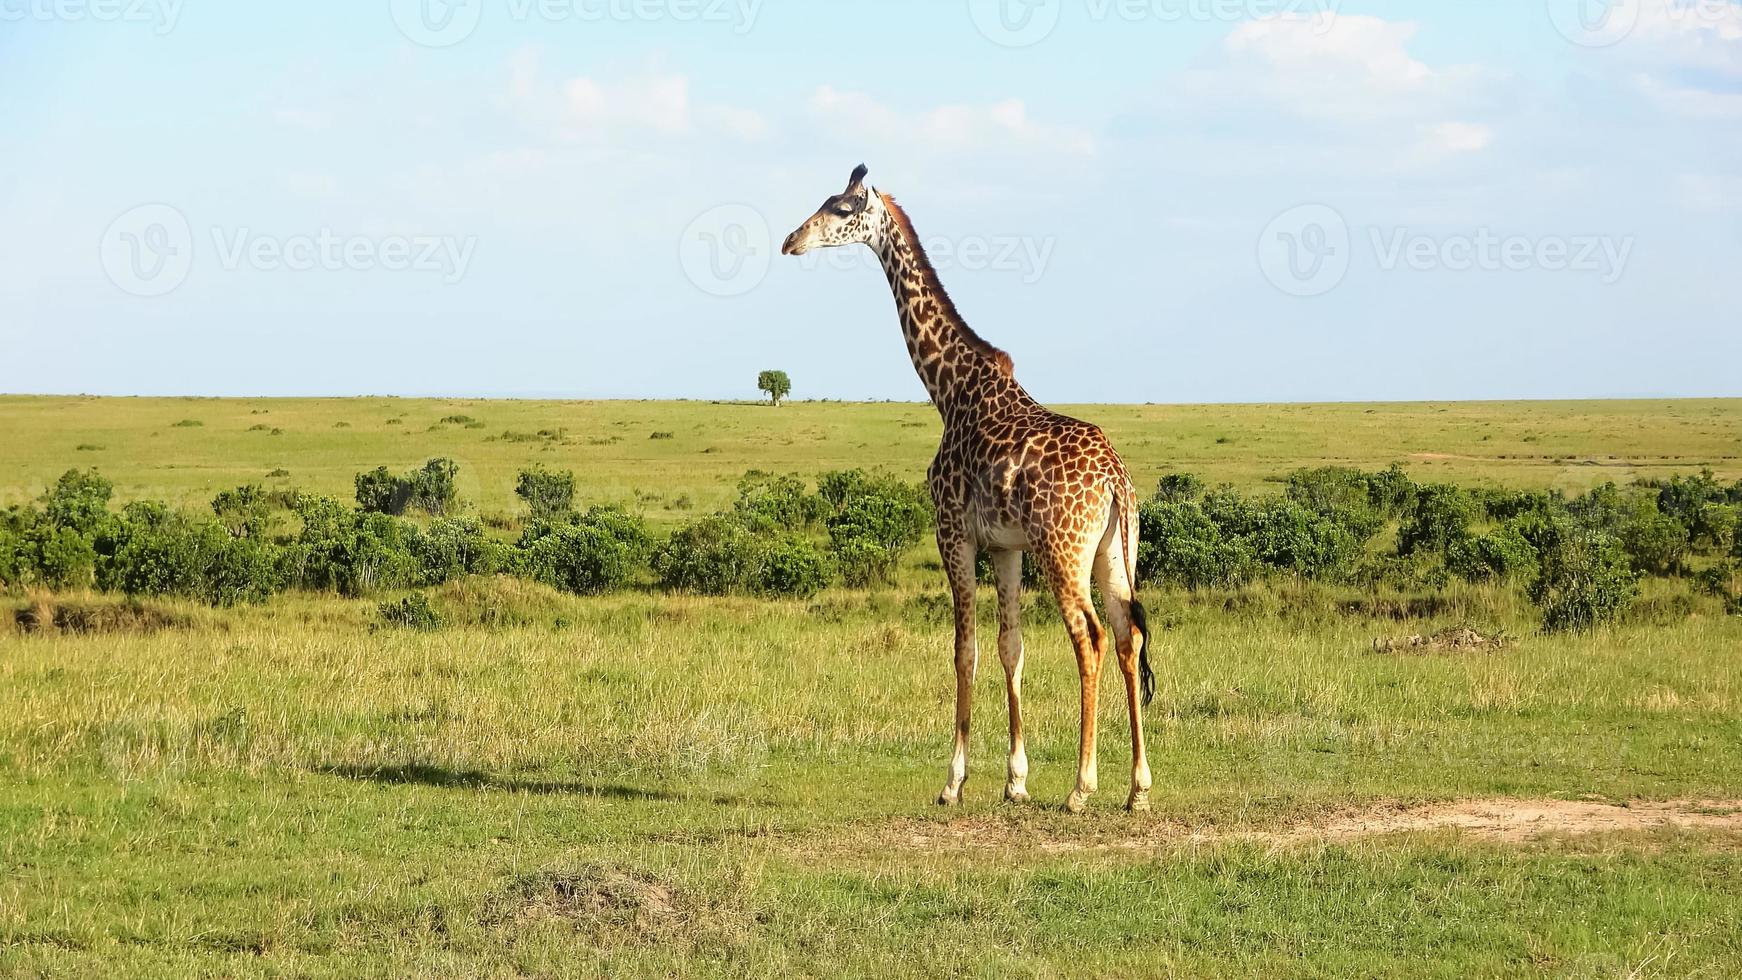 hermosa jirafa en la naturaleza salvaje de África. foto